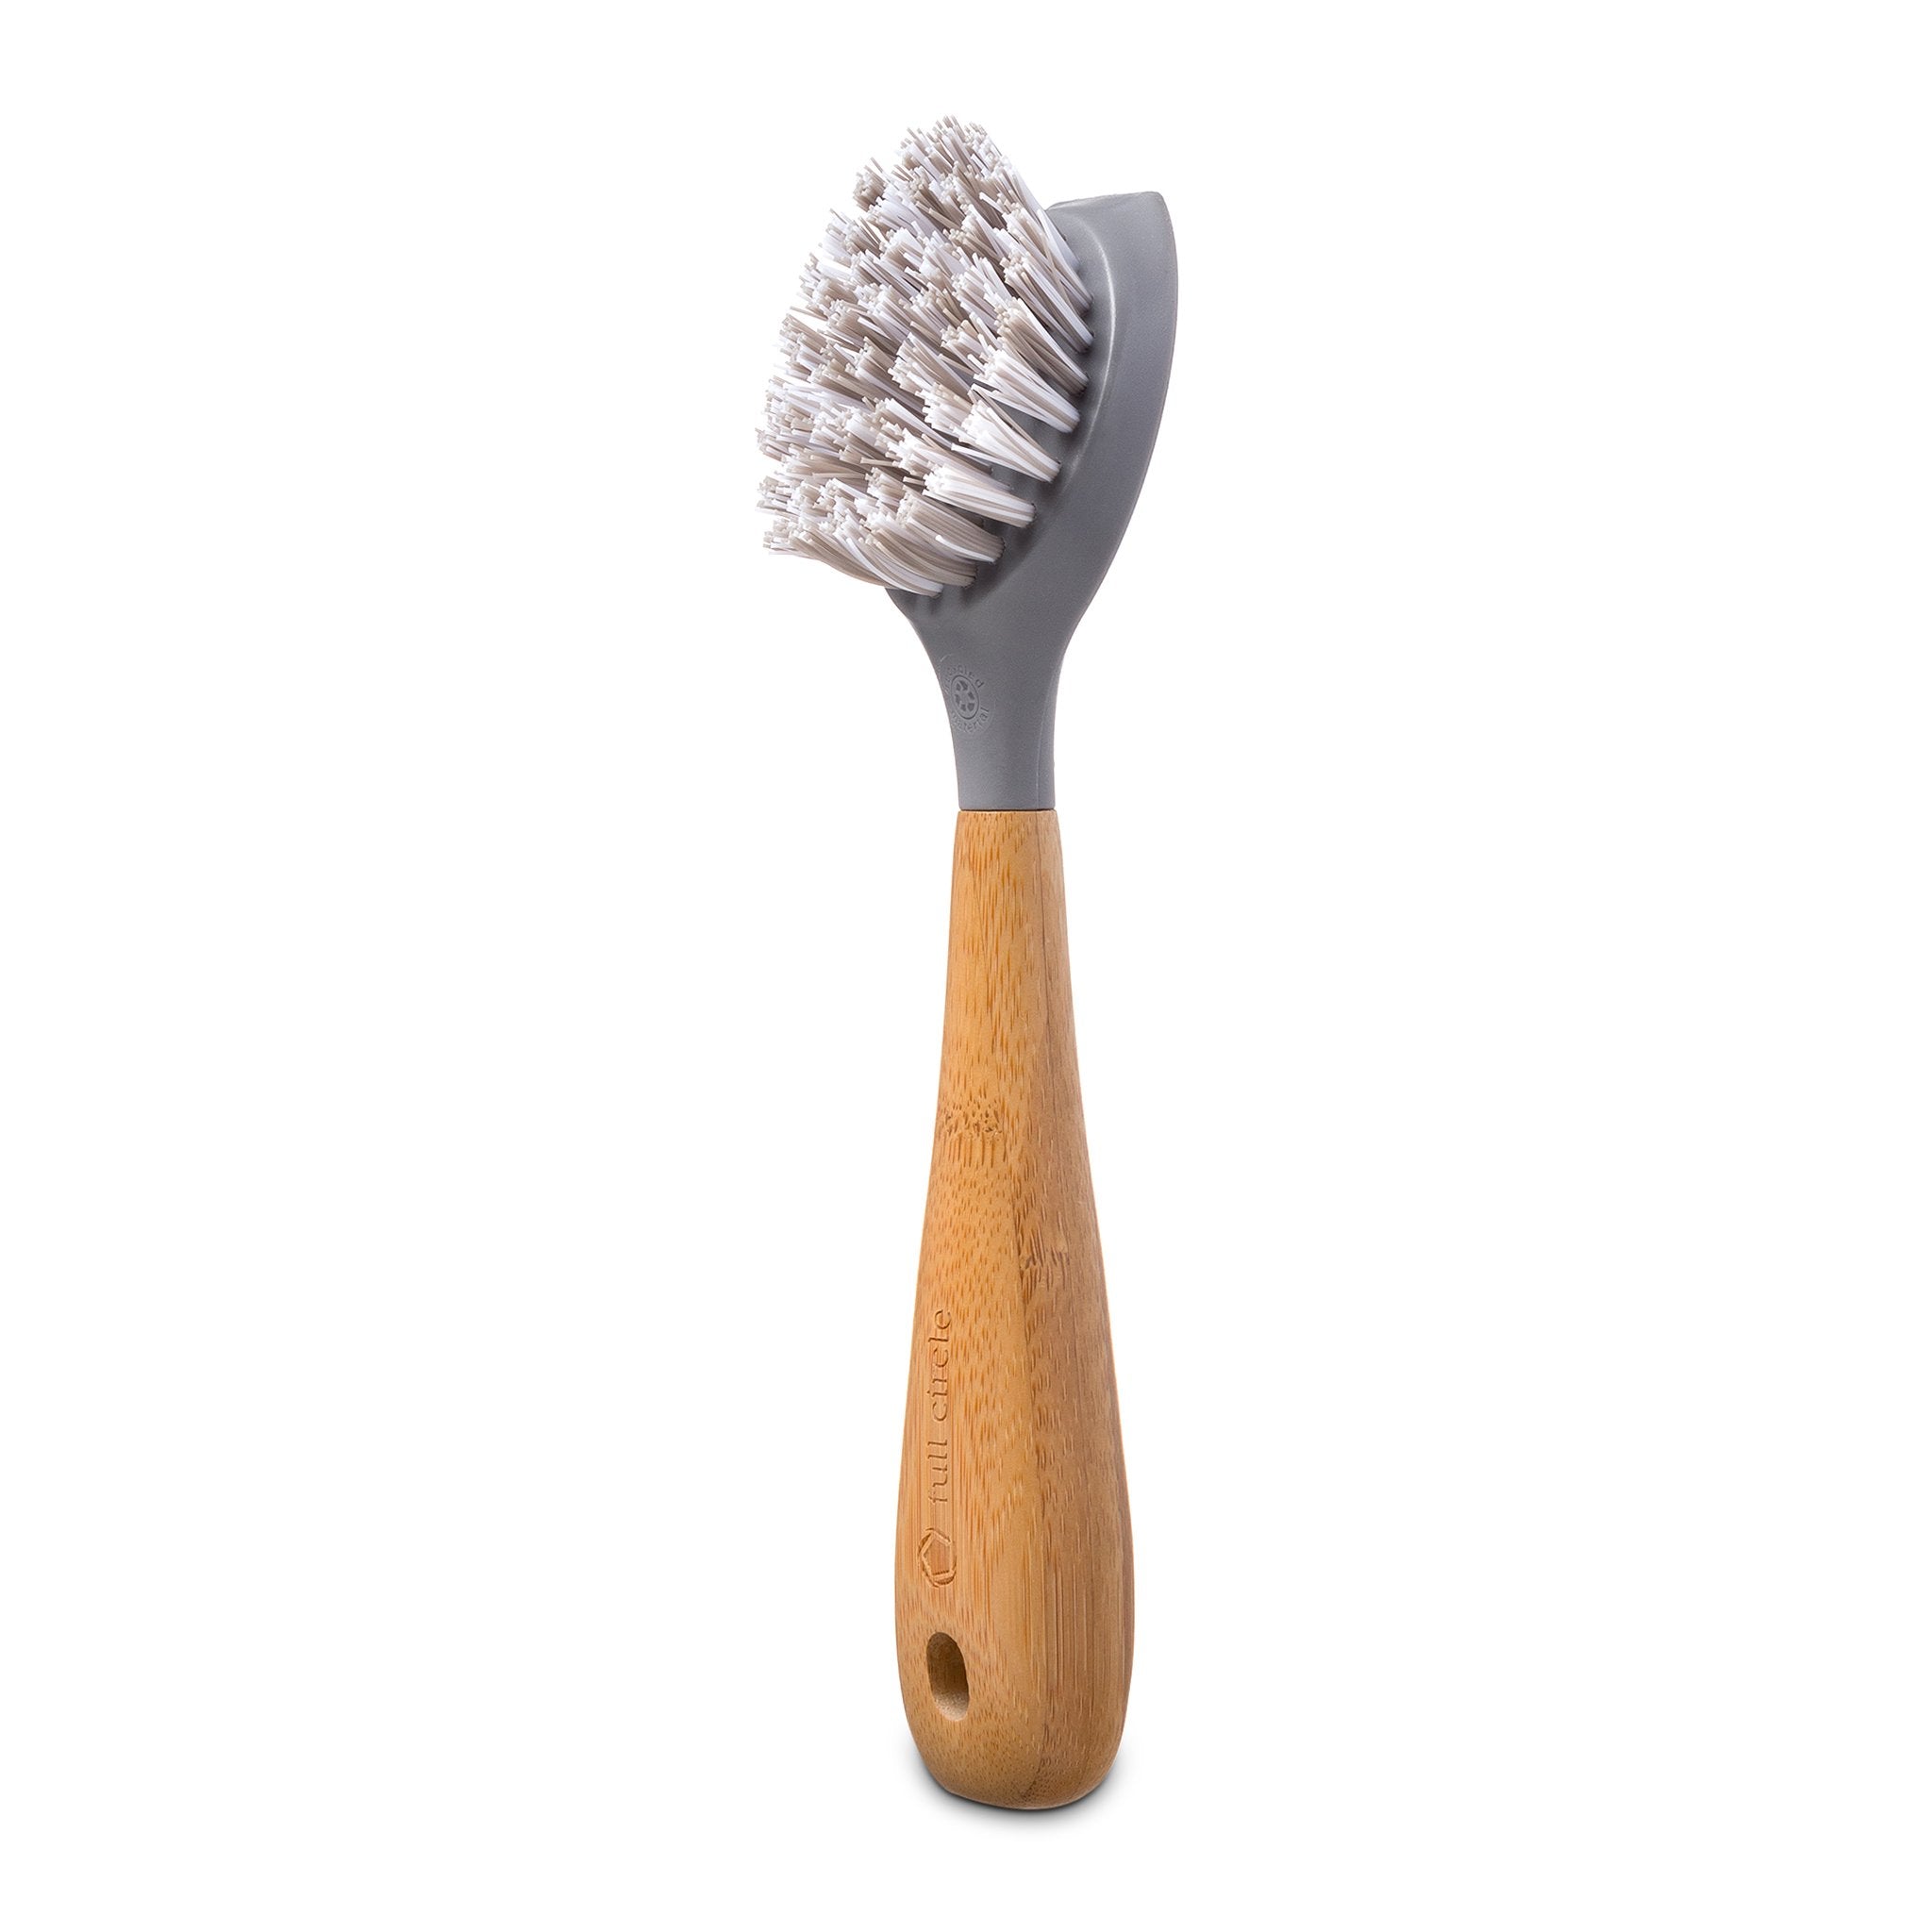 0.6 Stiff Drain Cleaning Brush